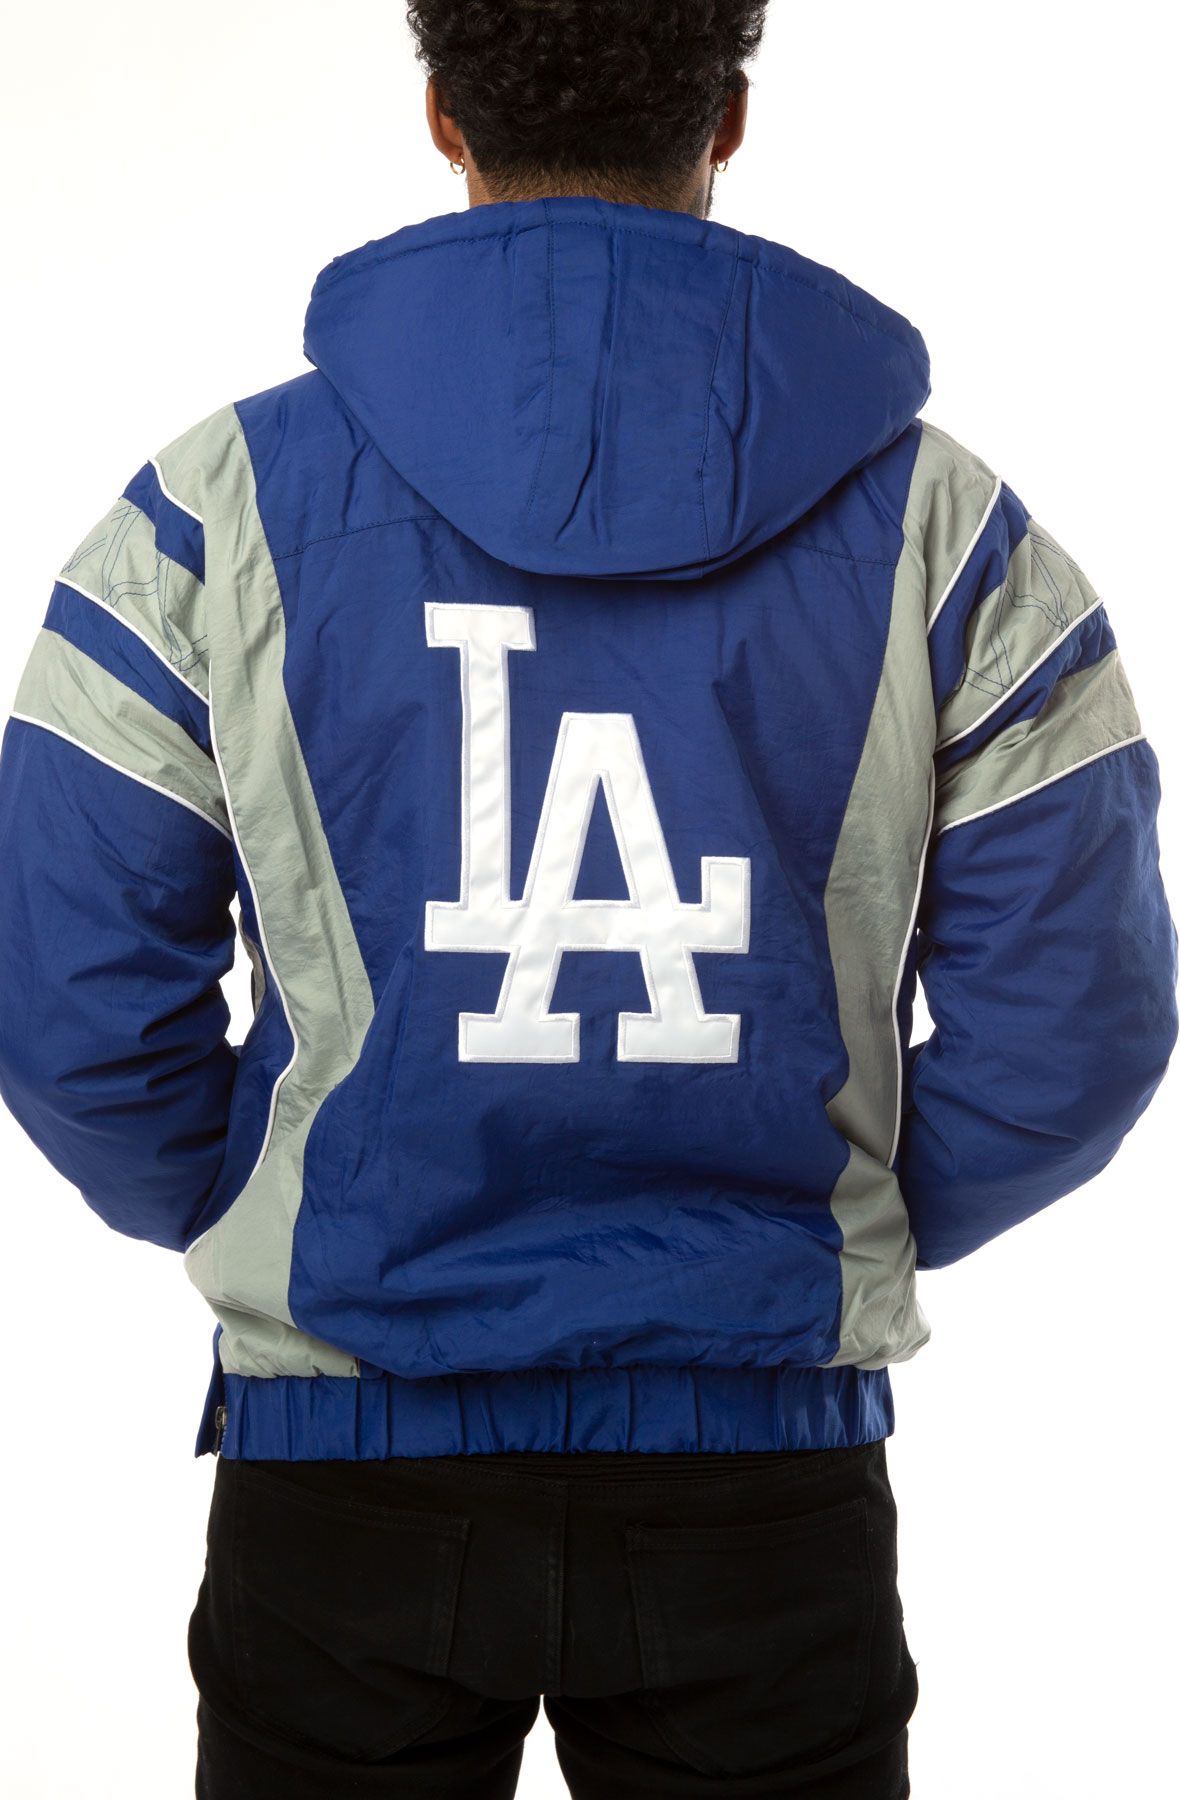 STARTER Los Angeles Dodgers Windbreaker Jacket LS950830-LAD